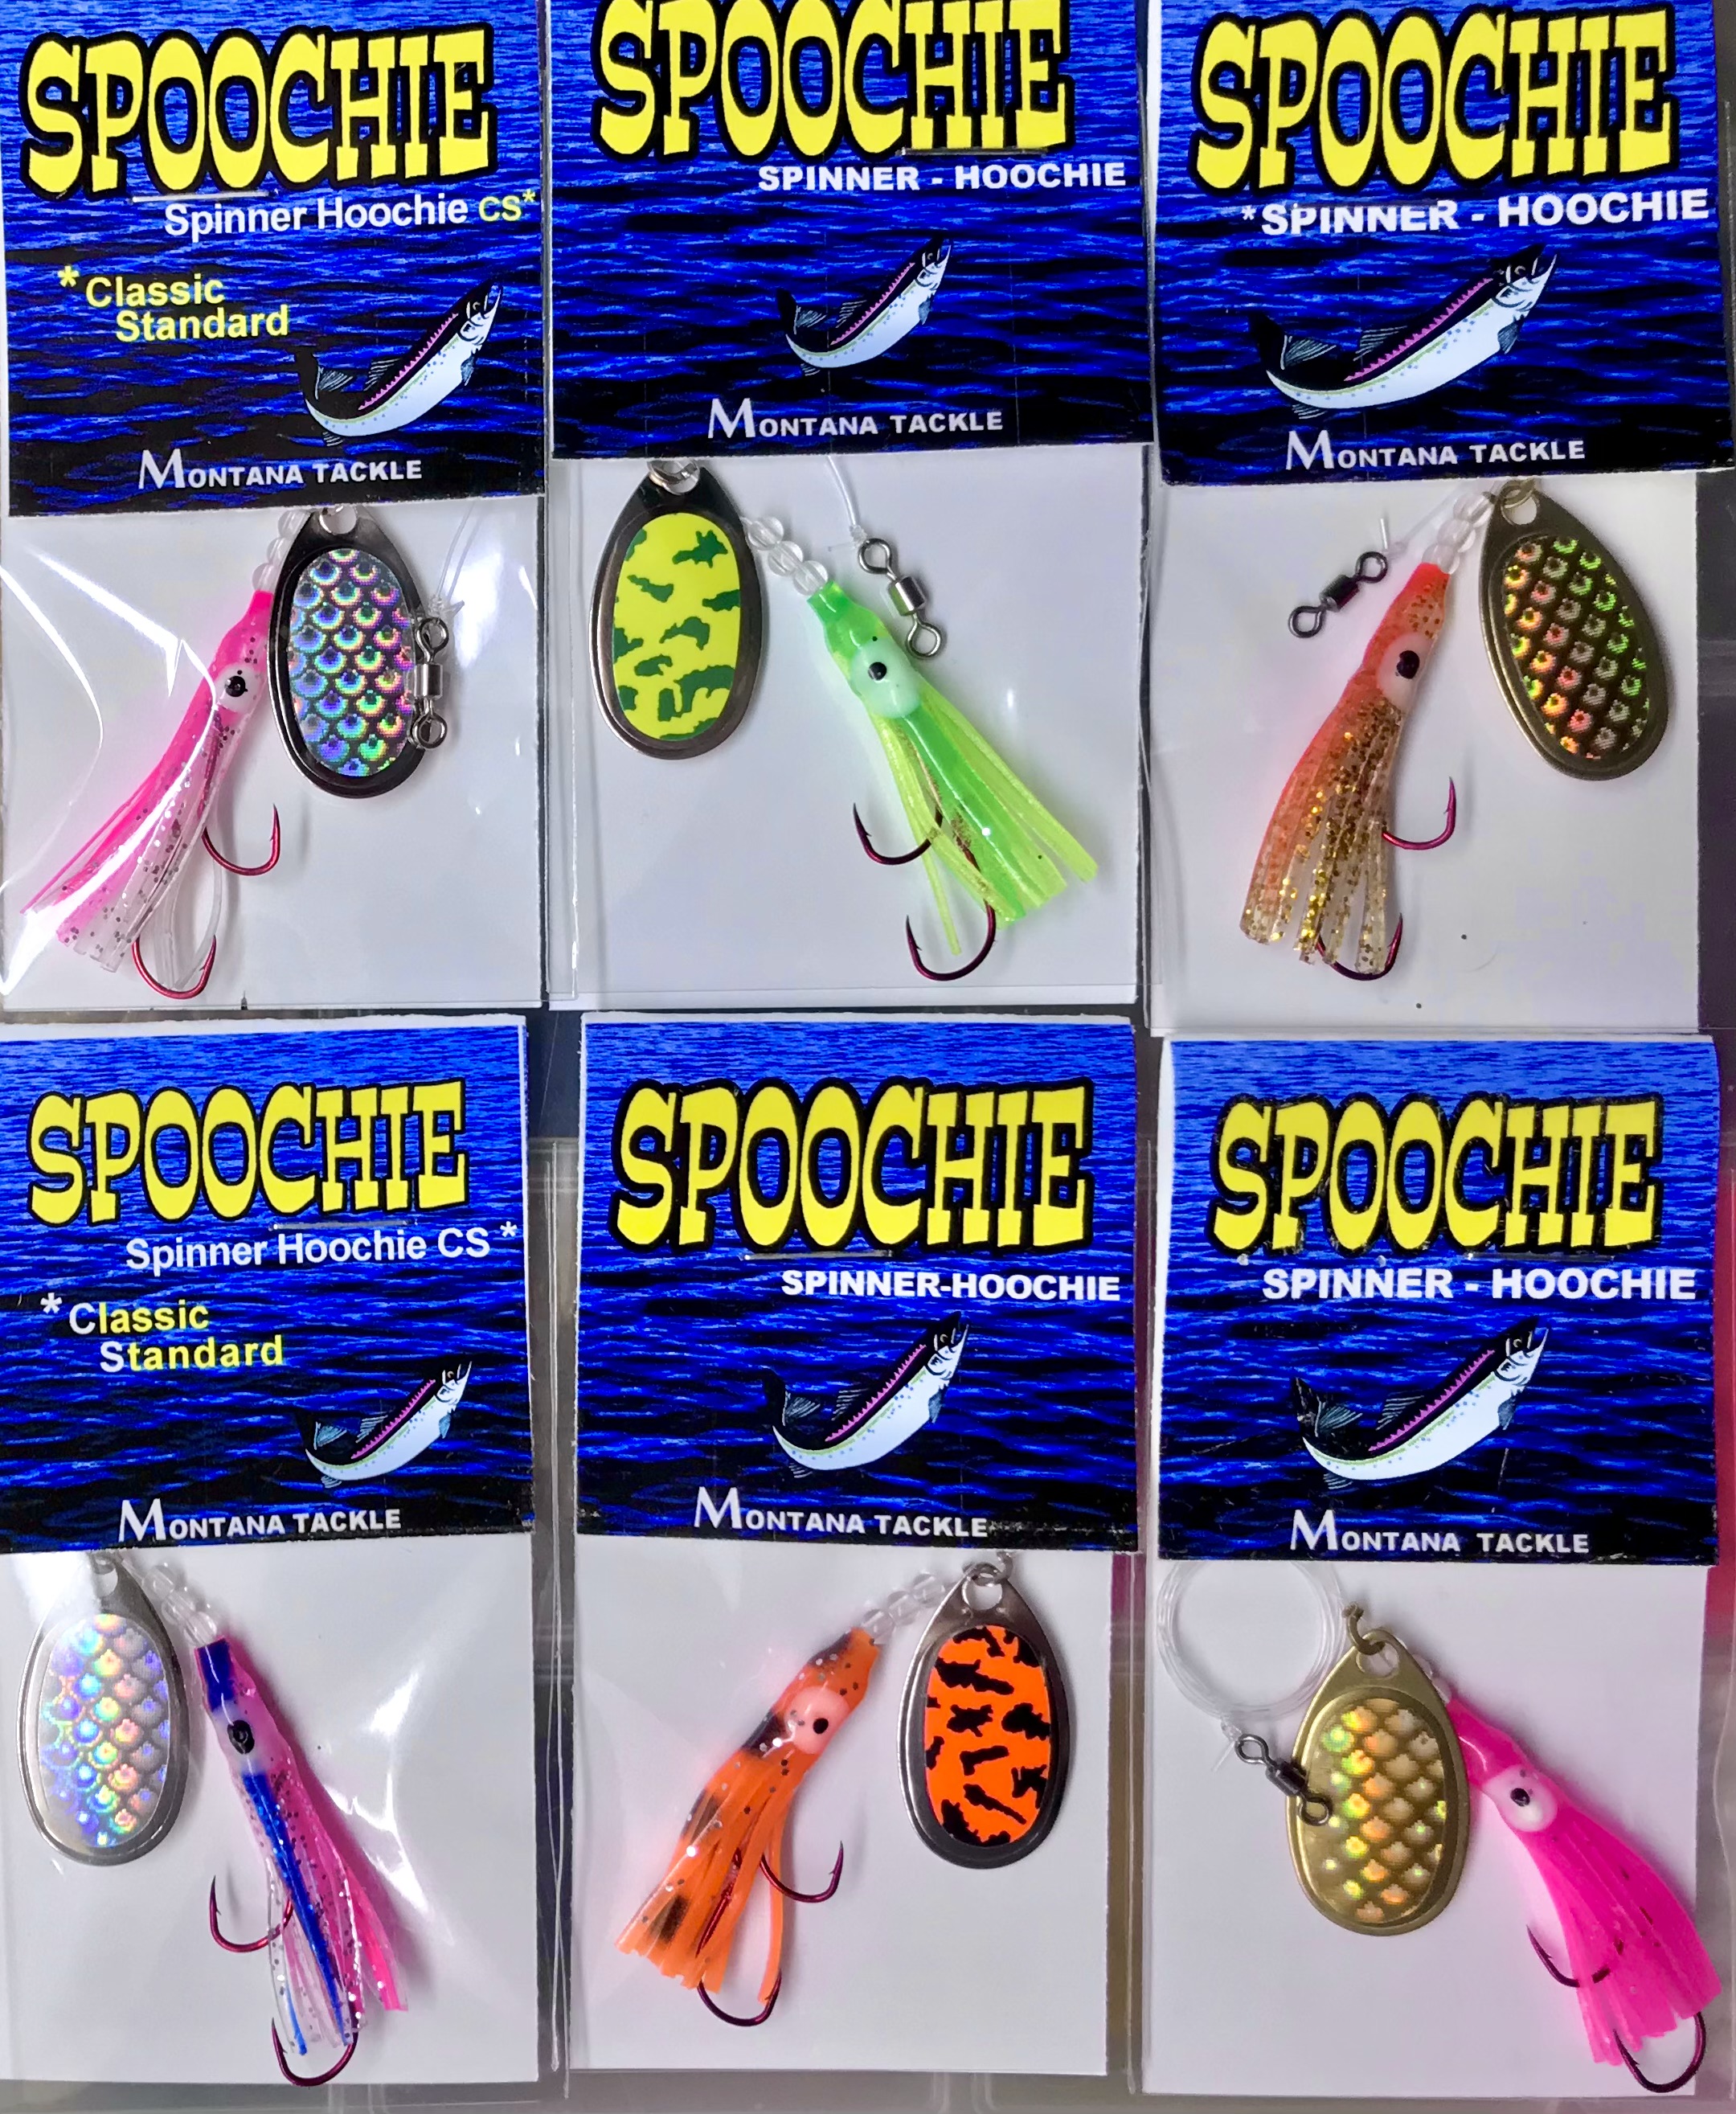 Spinner-Hoochies (6): SPOOCHIE Assortment - Montana Tackle